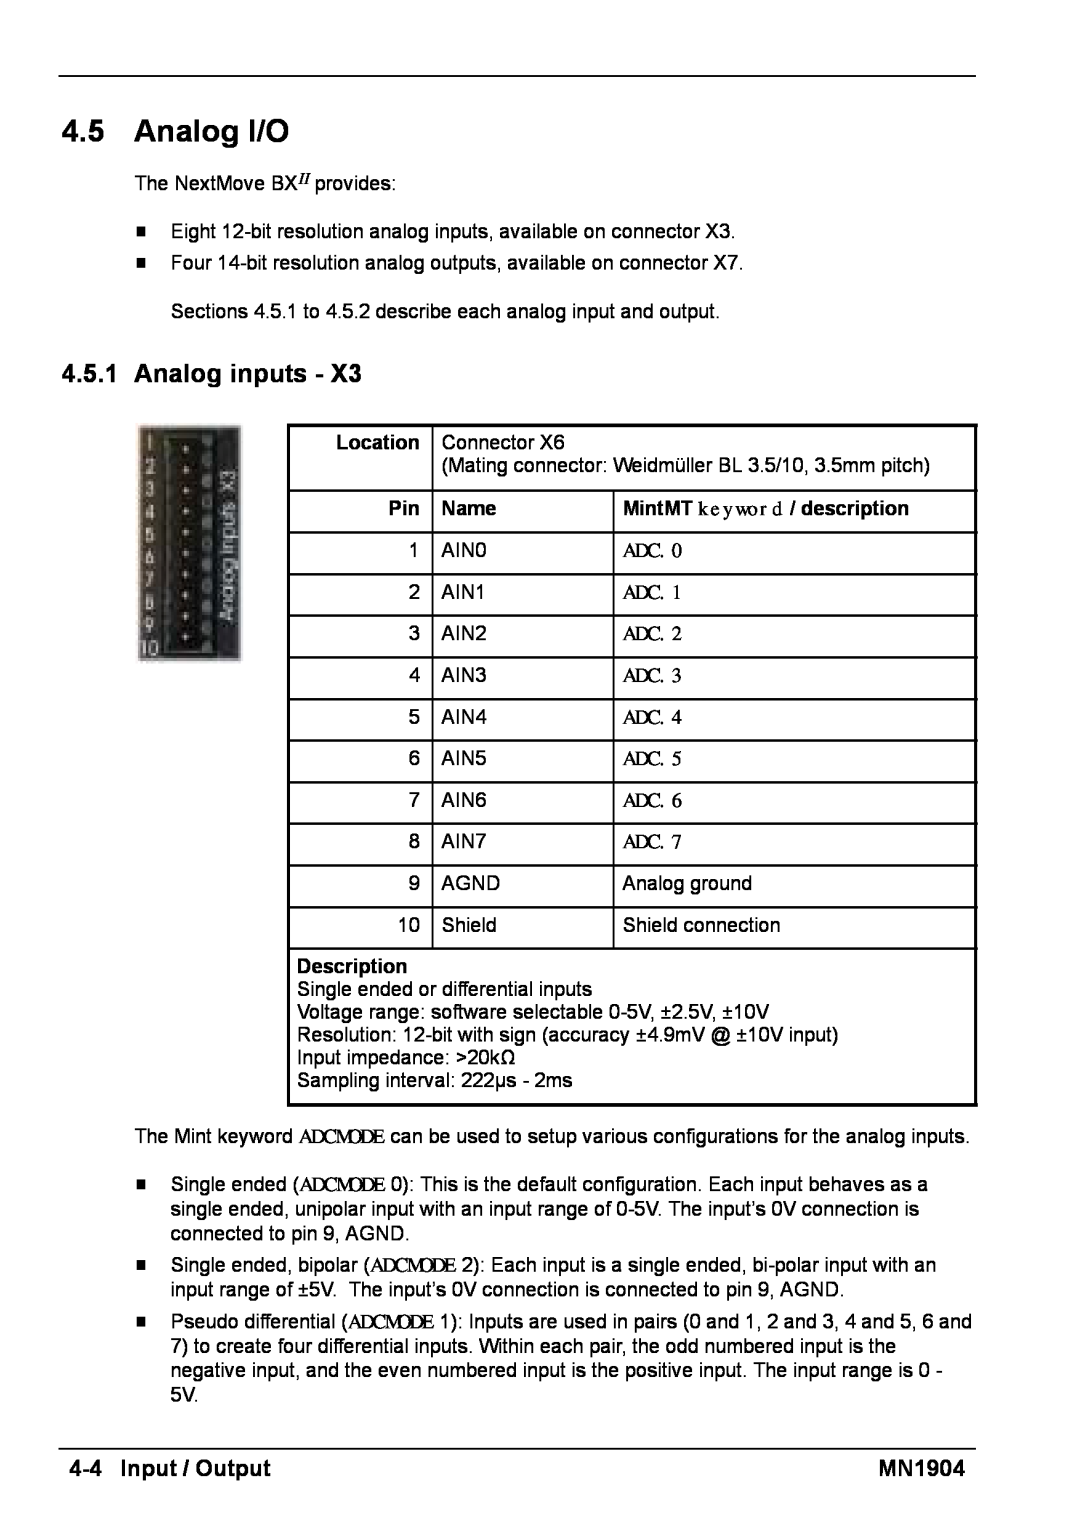 Baldor BXII installation manual Analog I/O, 4.5.1Analog inputs 